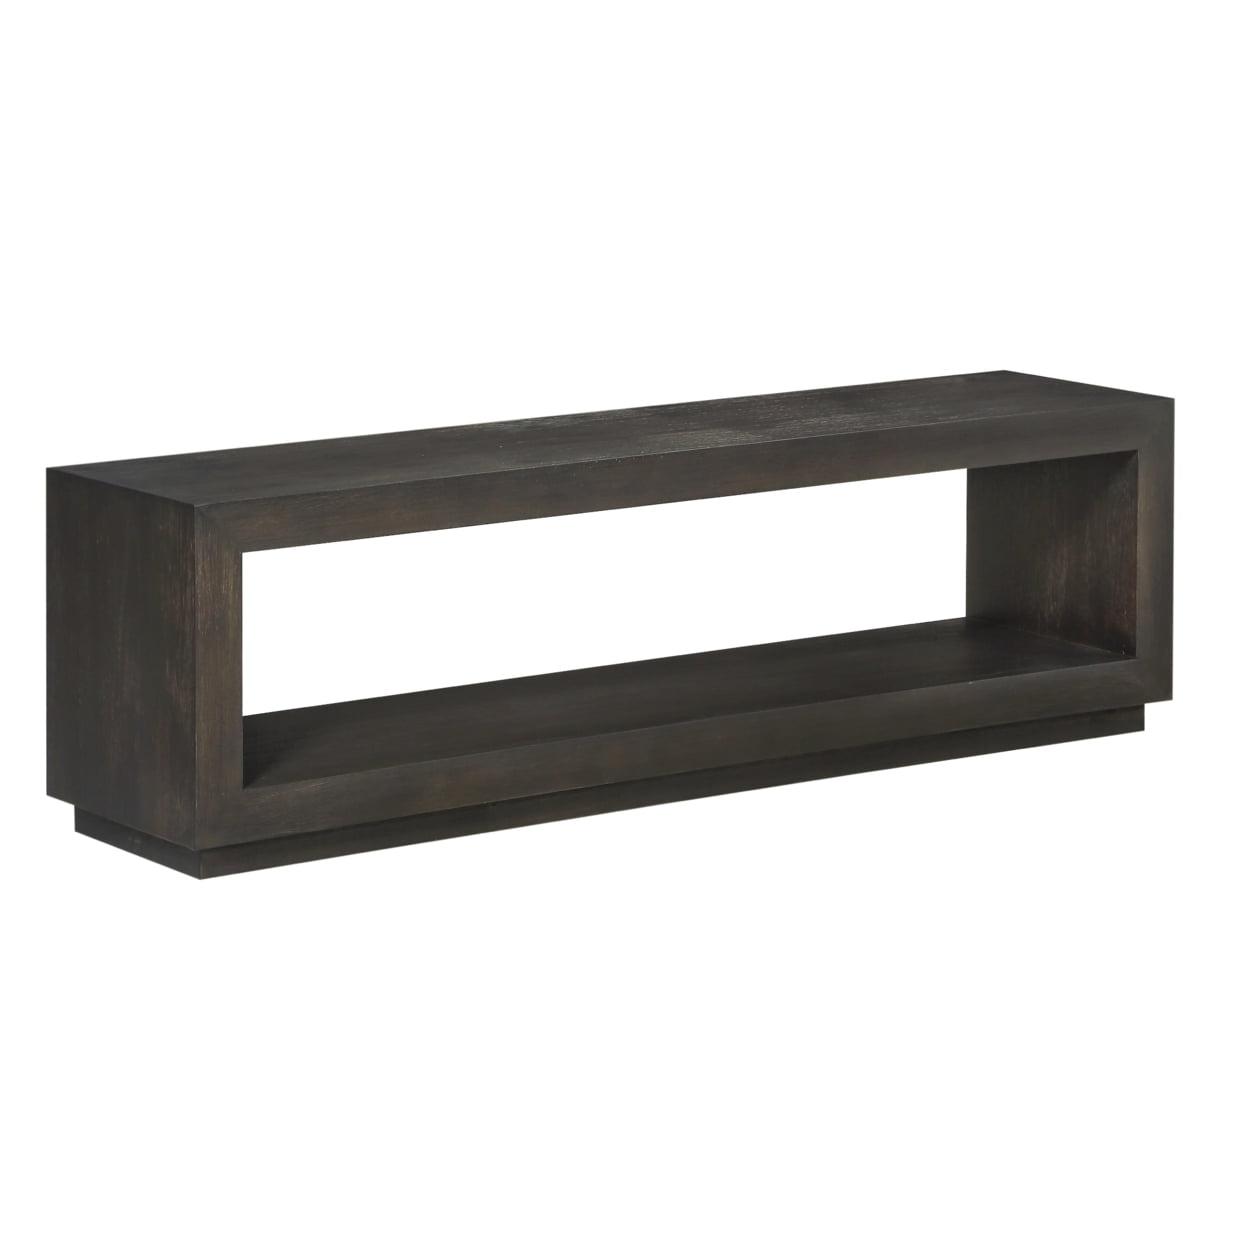 Basalt Gray Wooden Bench with Open Storage Shelf, 60" Length